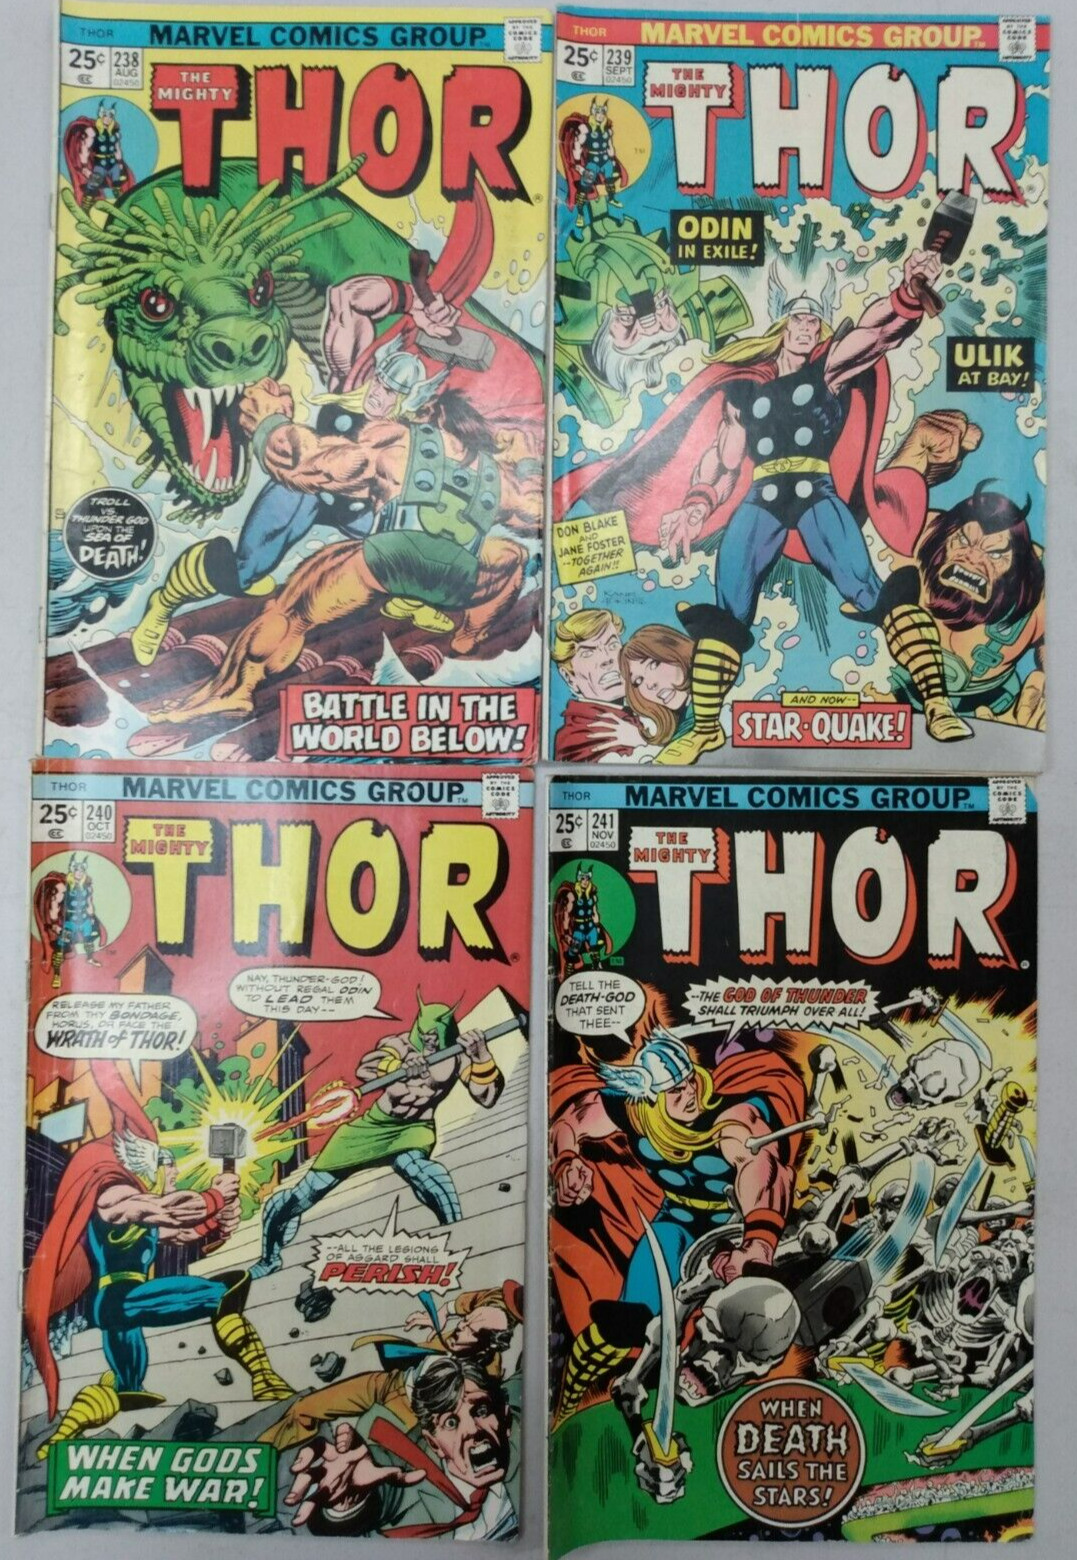 Thor #246 #247 #249 #251 Marvel 1976 Comic Books